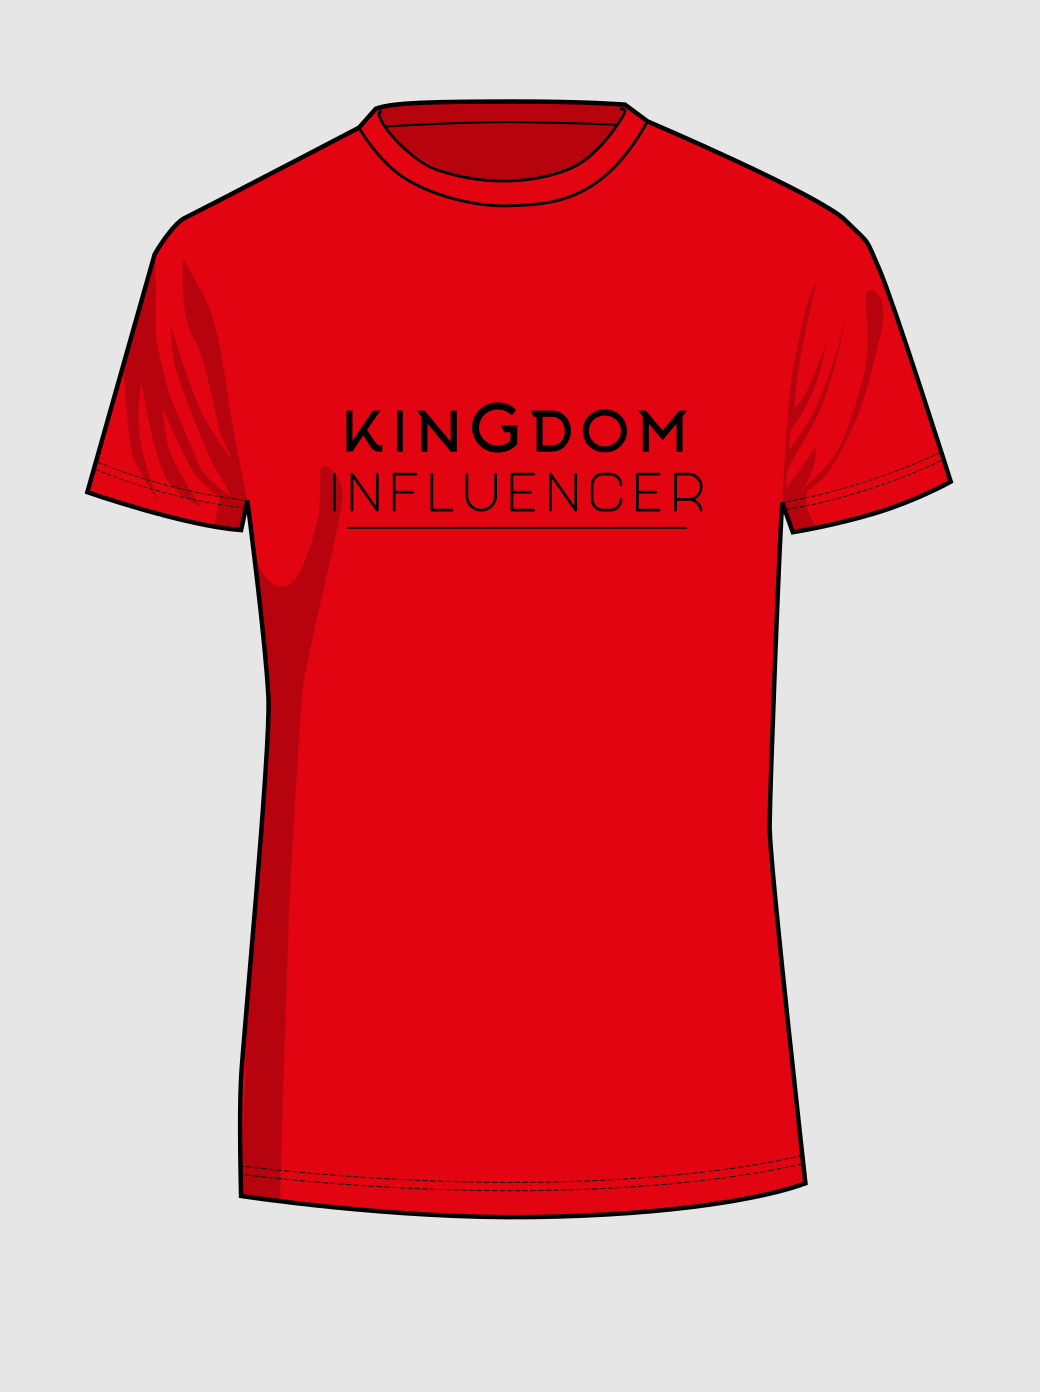 Männer T-Shirt - Kingdom Influencer